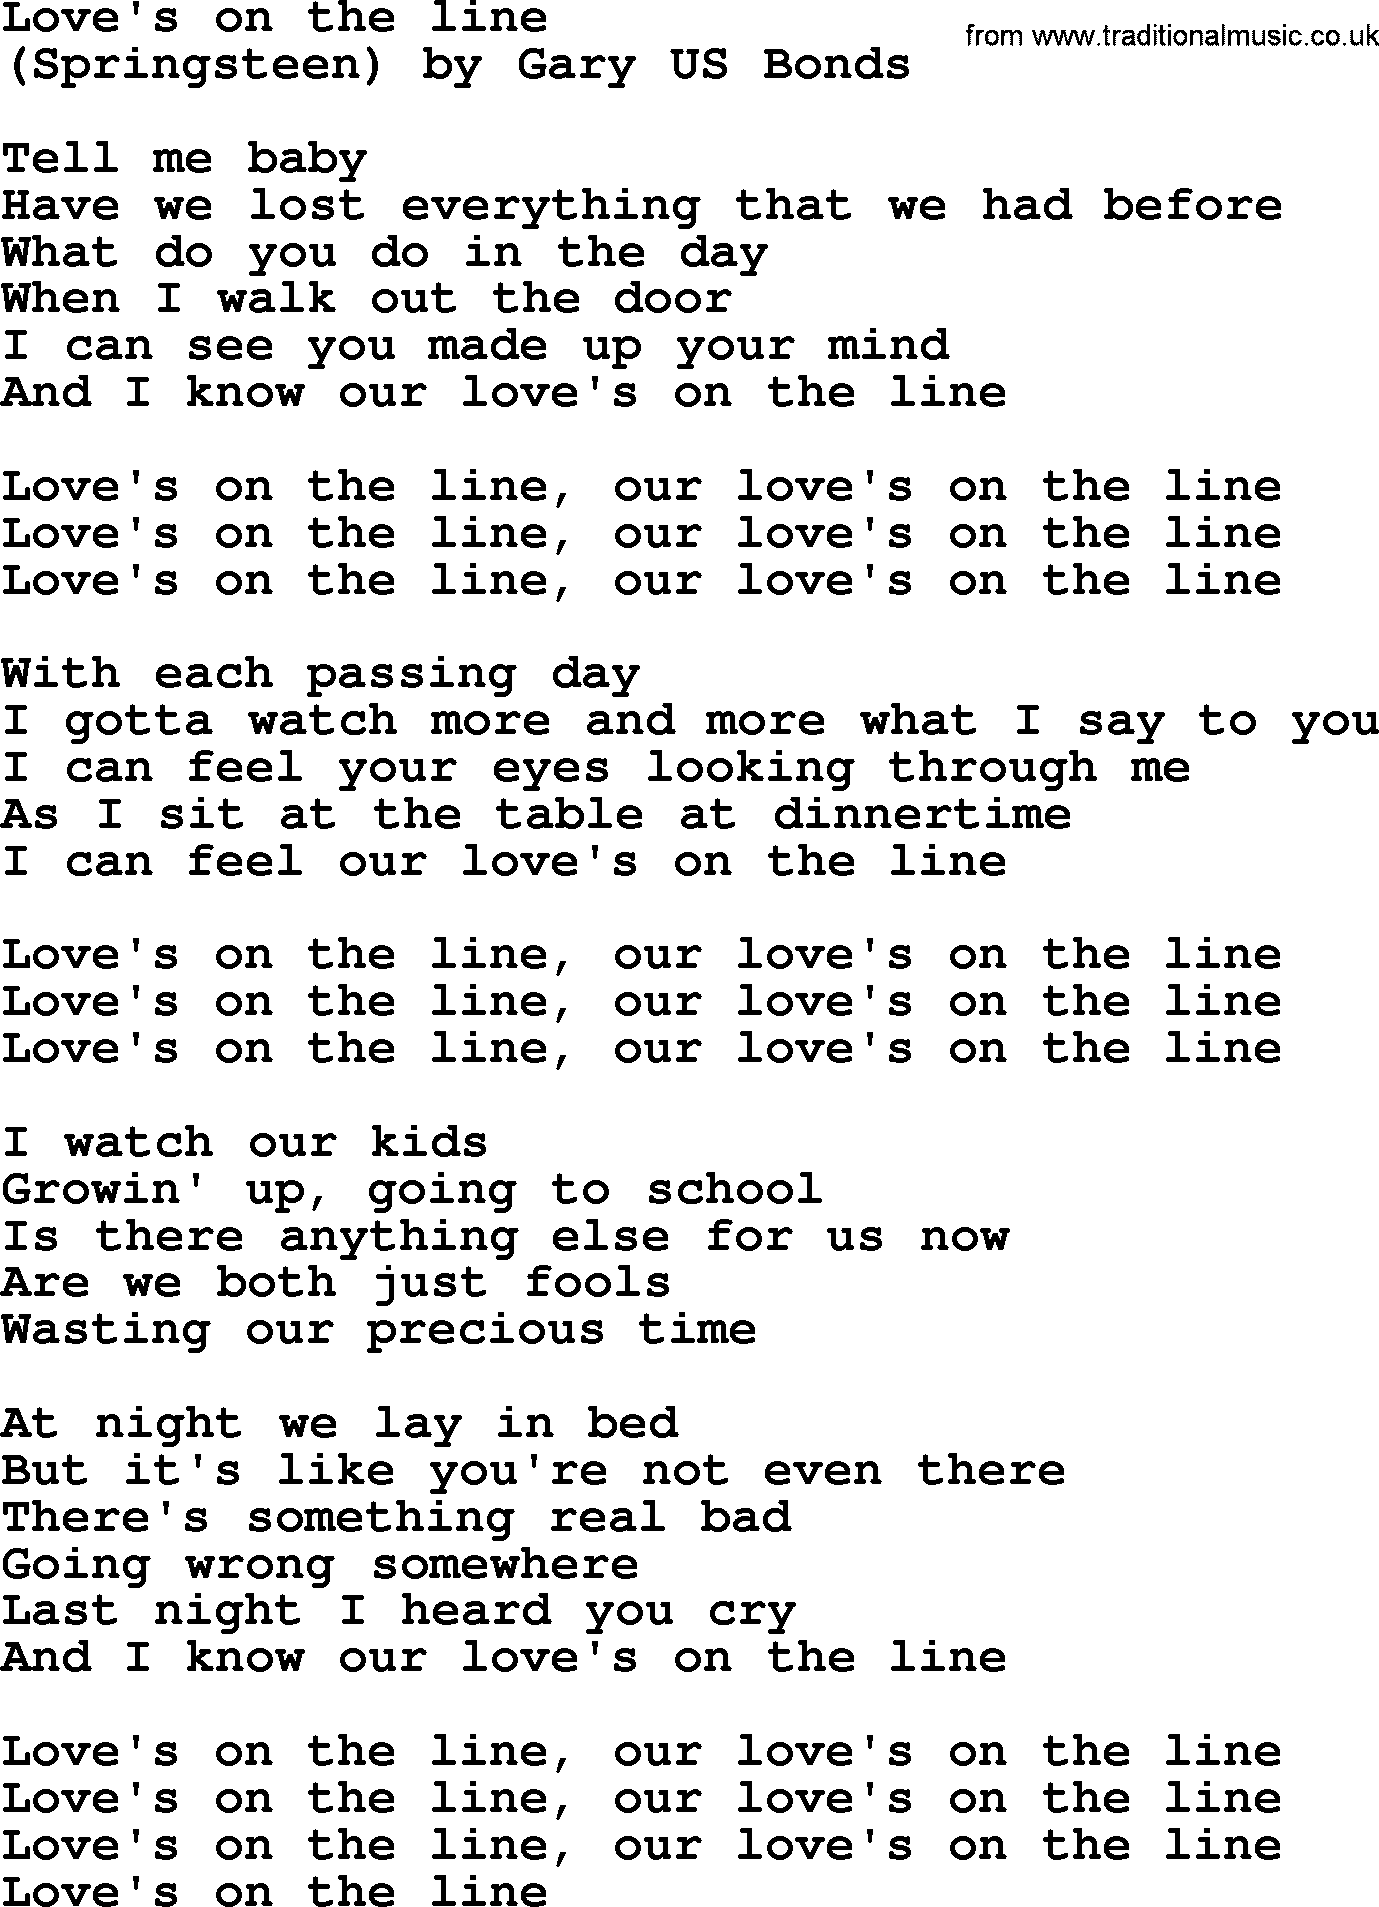 Bruce Springsteen song: Love's On The Line lyrics